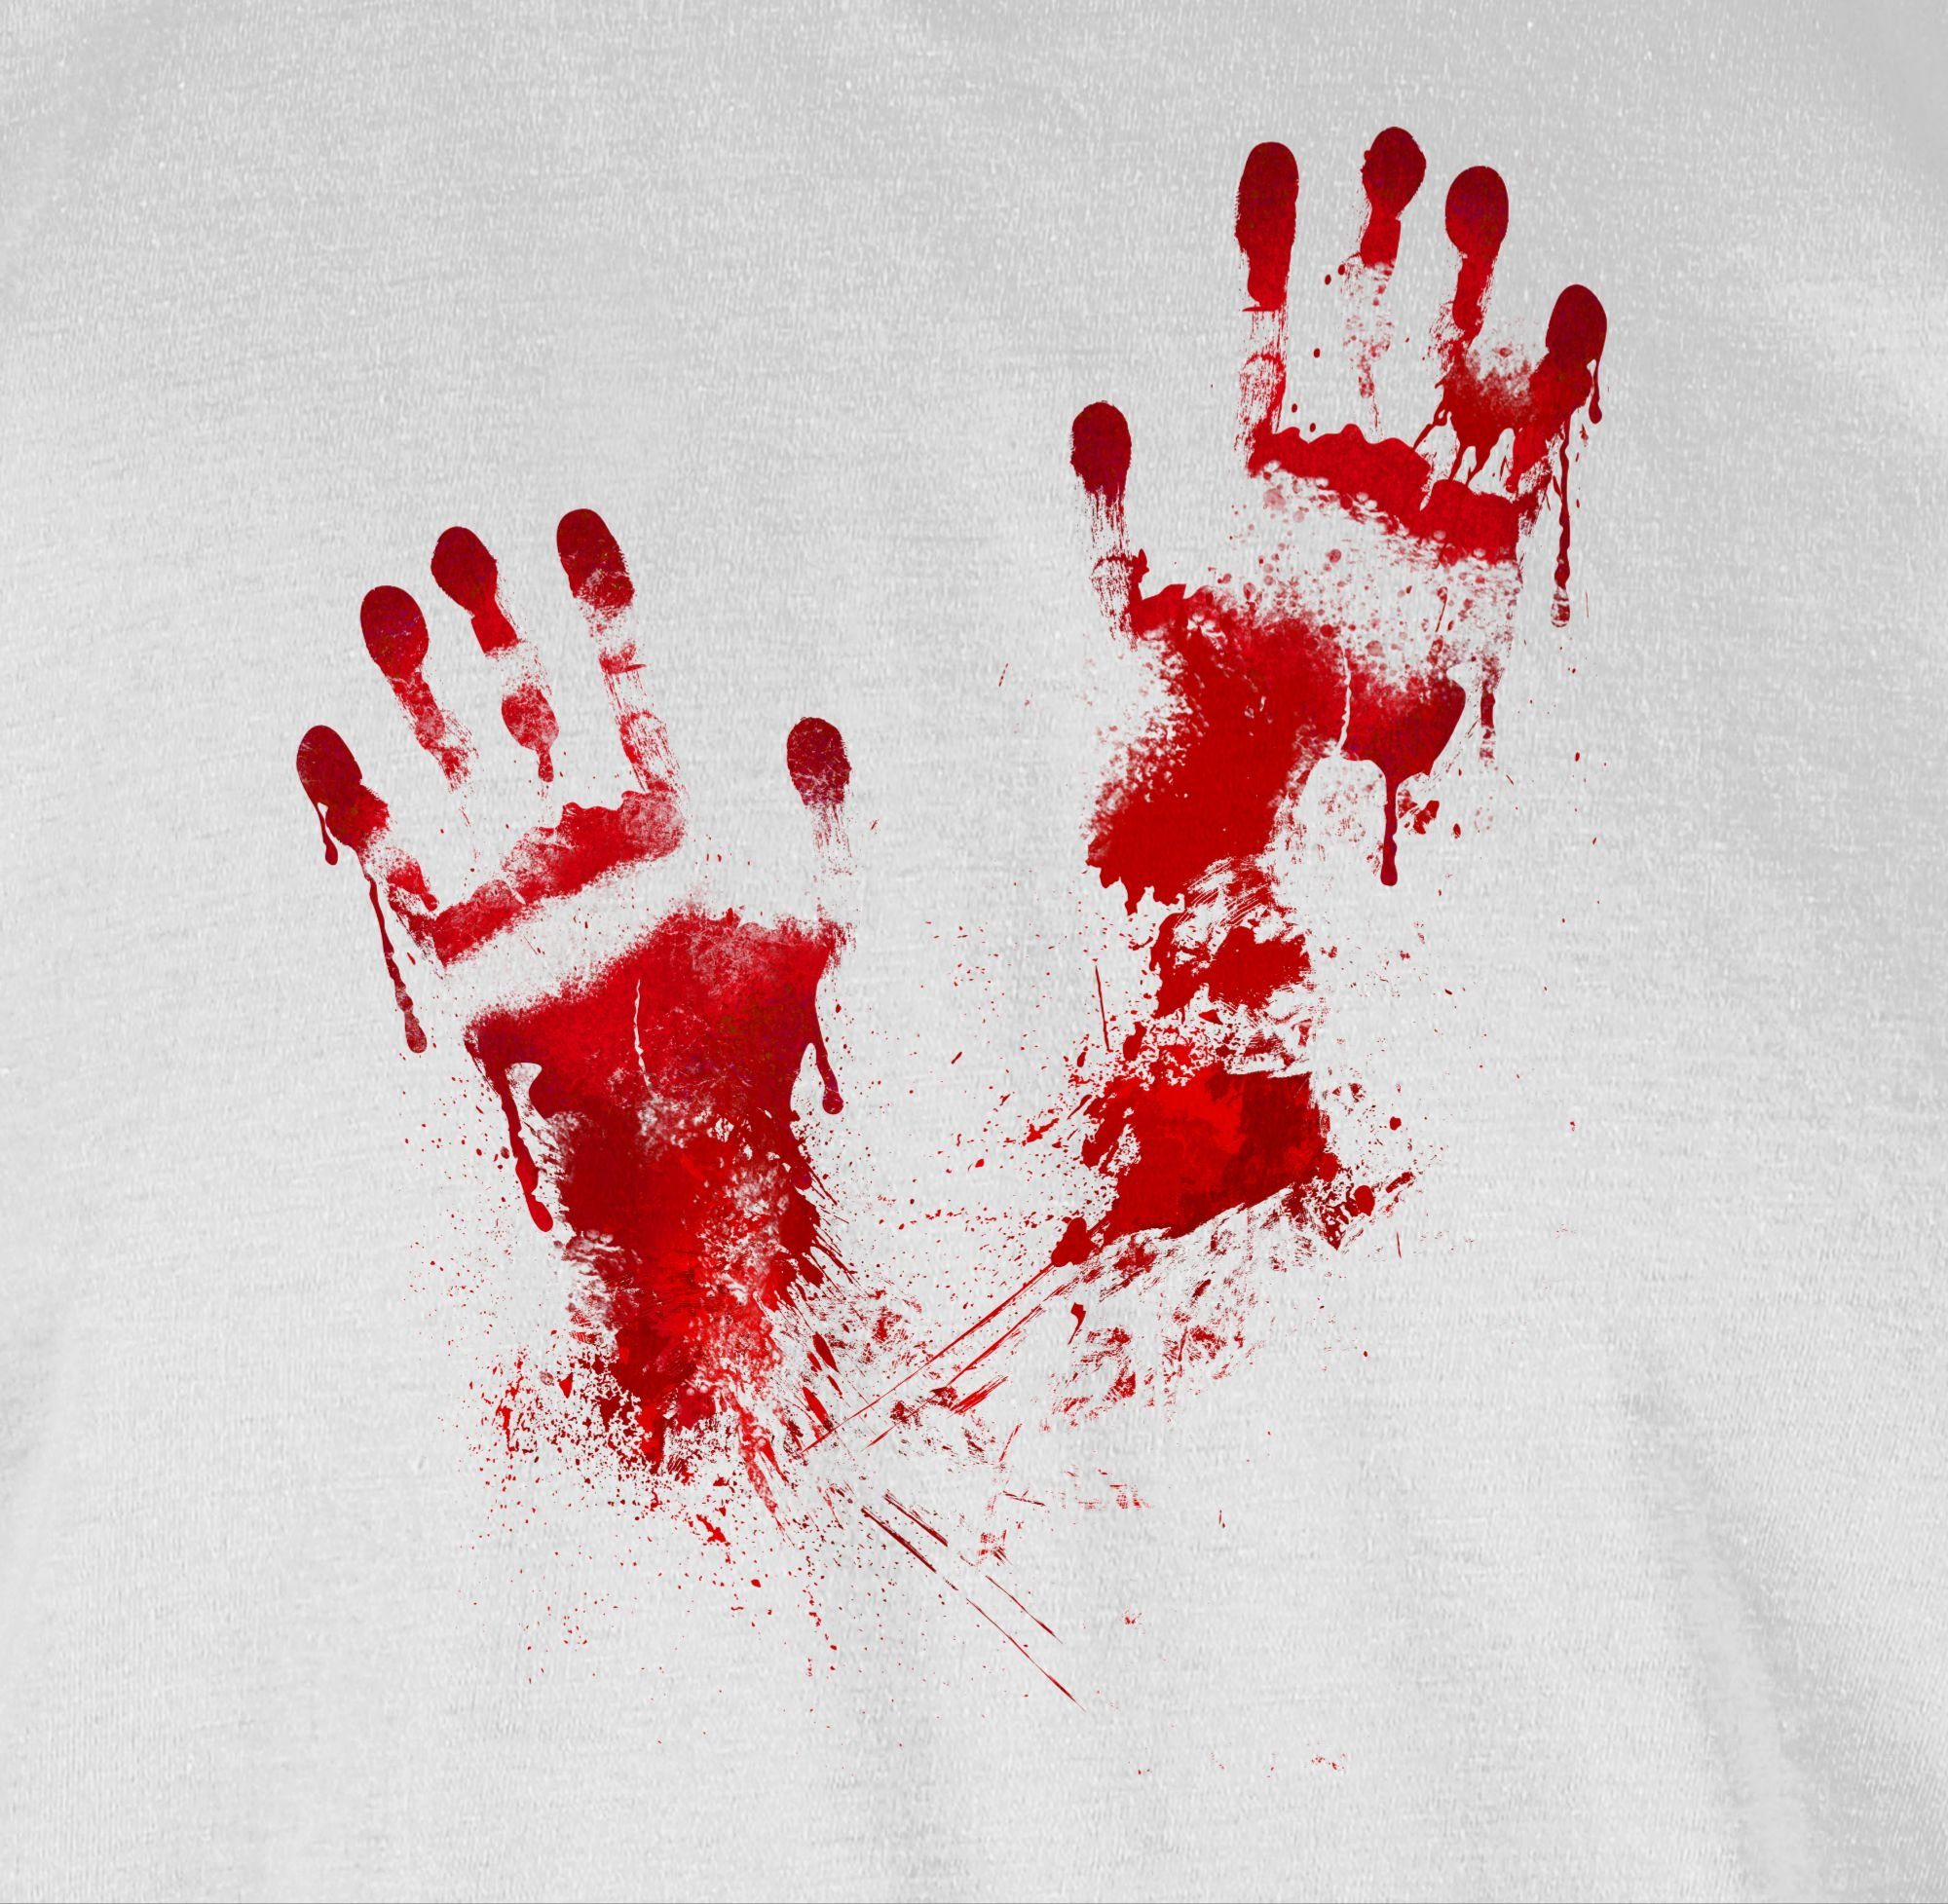 Shirtracer Herren Gruselig Blutige Halloween Kostüme Weiß T-Shirt Handabdruck 02 Blut Handabdrücke